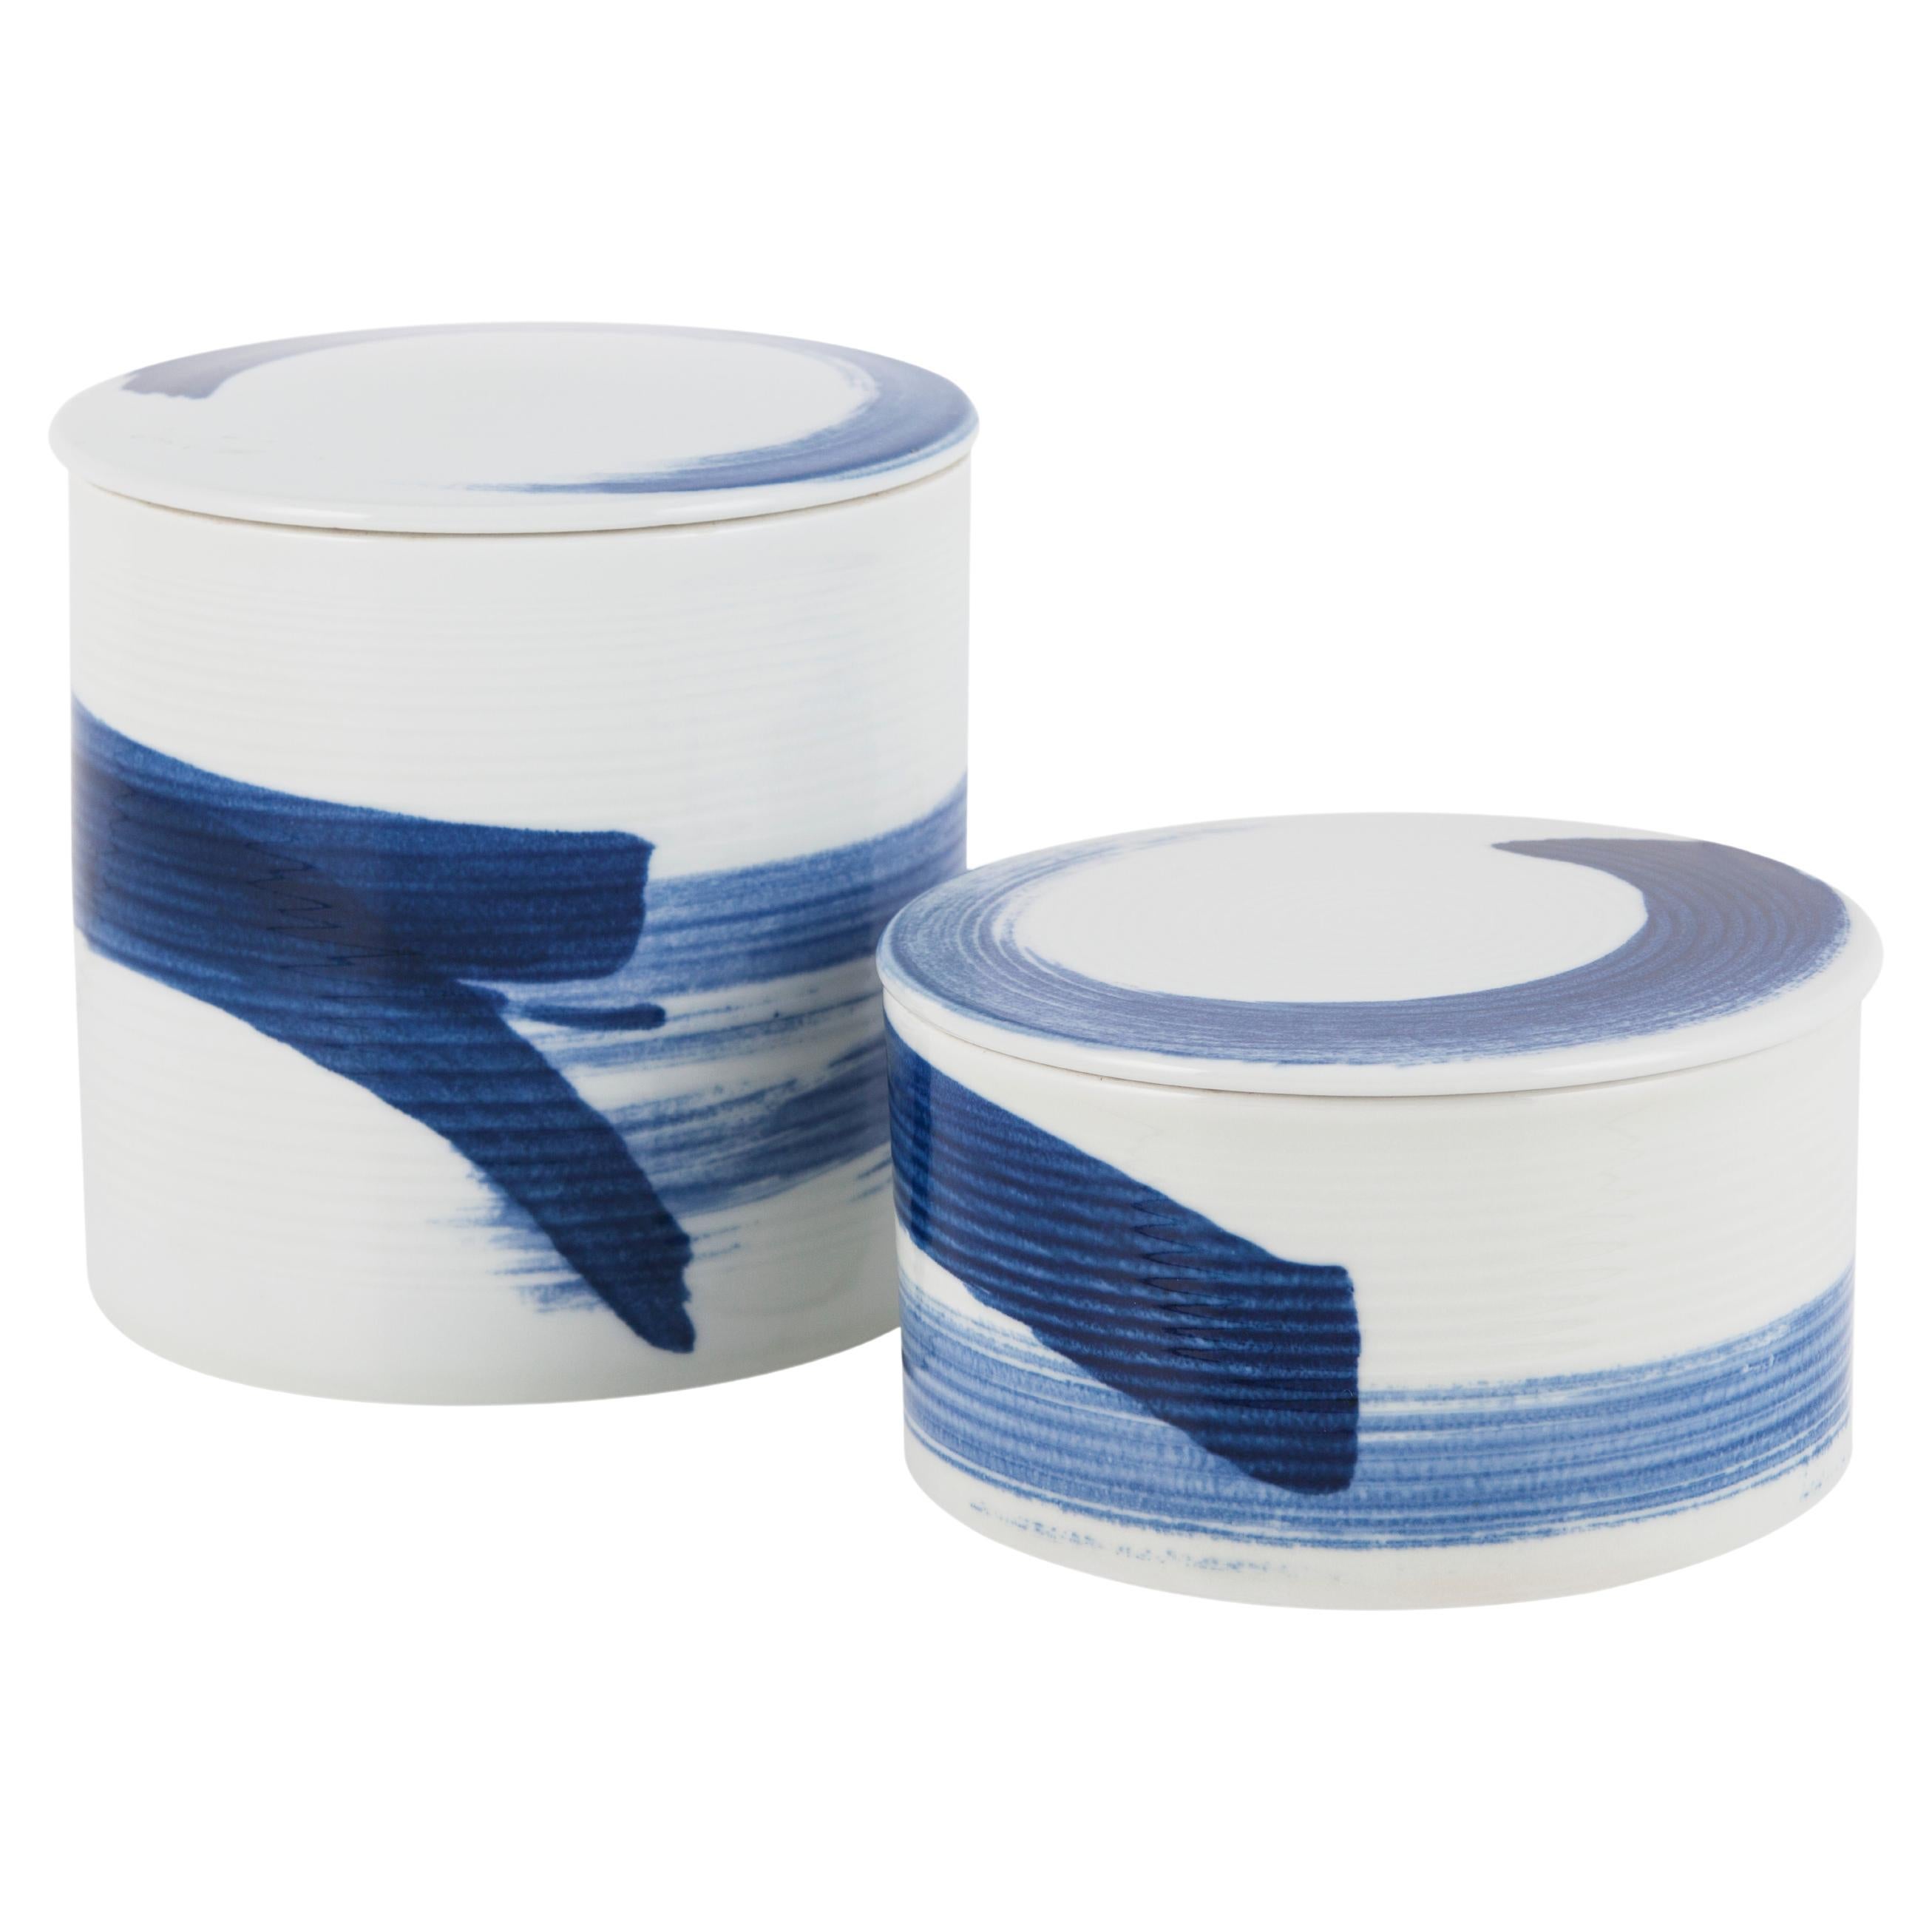 Set of 2 Porcelain Wang Pots, Blue and White, Handmolded & Handpainted